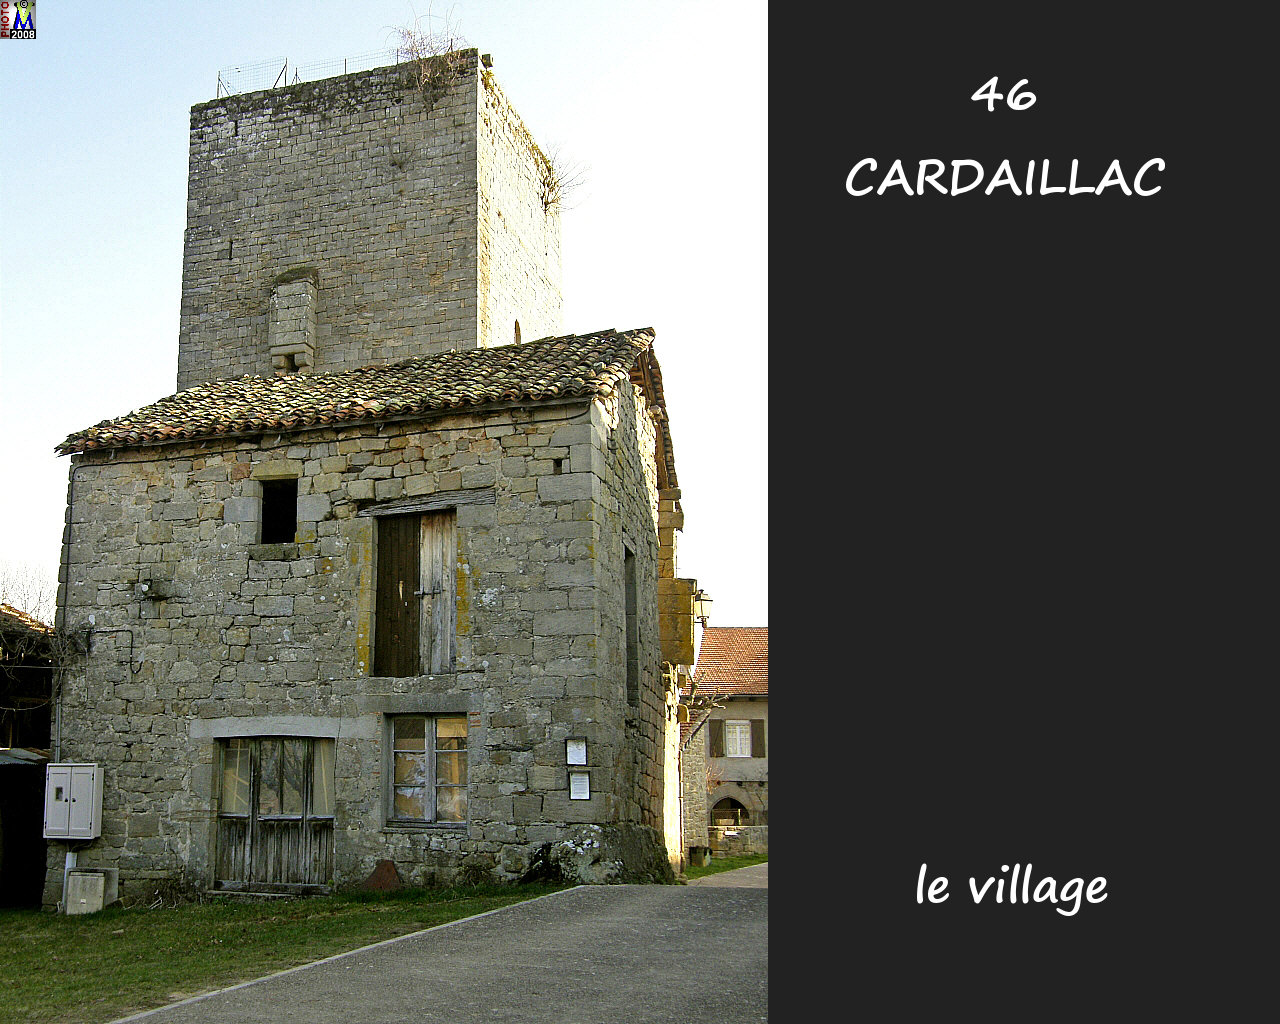 46CARDAILLAC_village_152.jpg